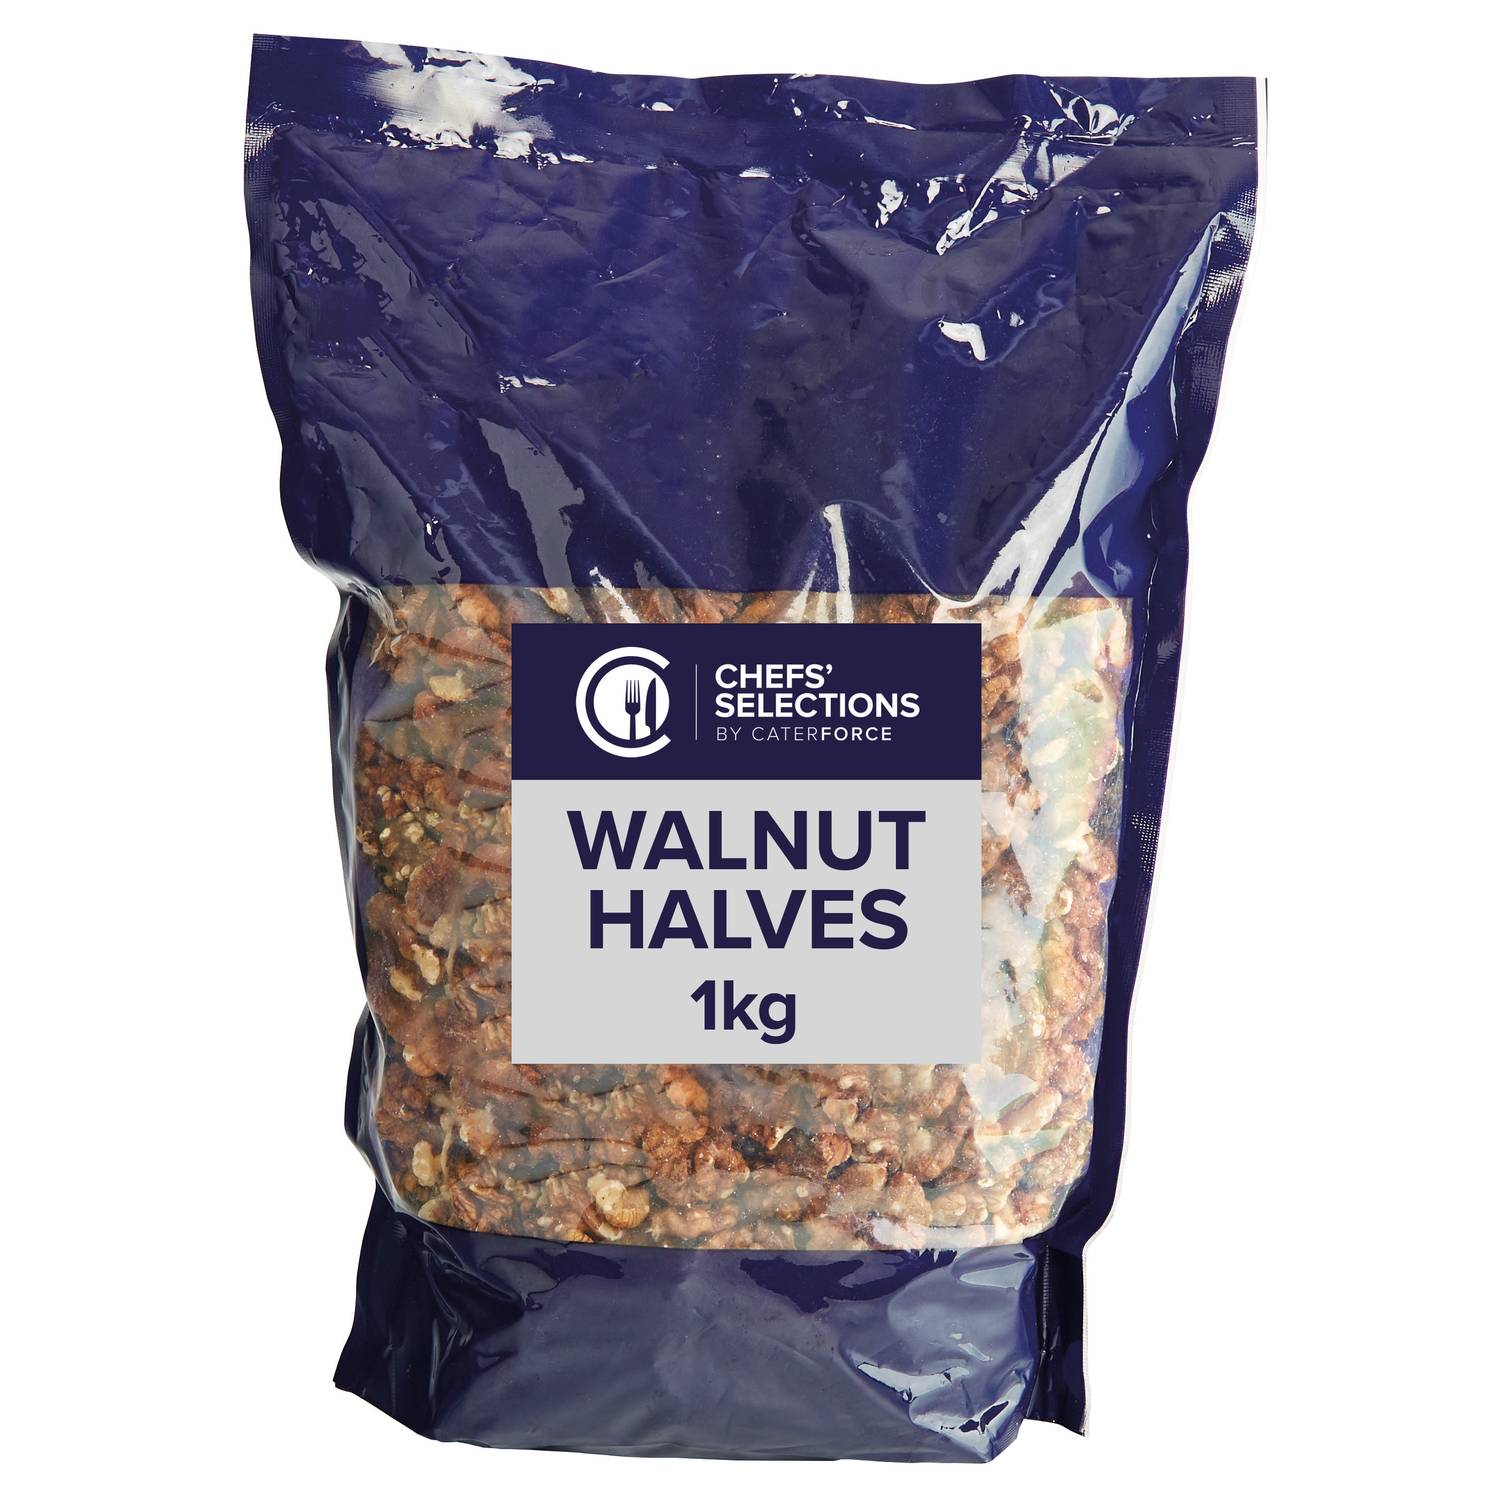 Chefs’ Selections Walnut Halves (6 x 1kg)